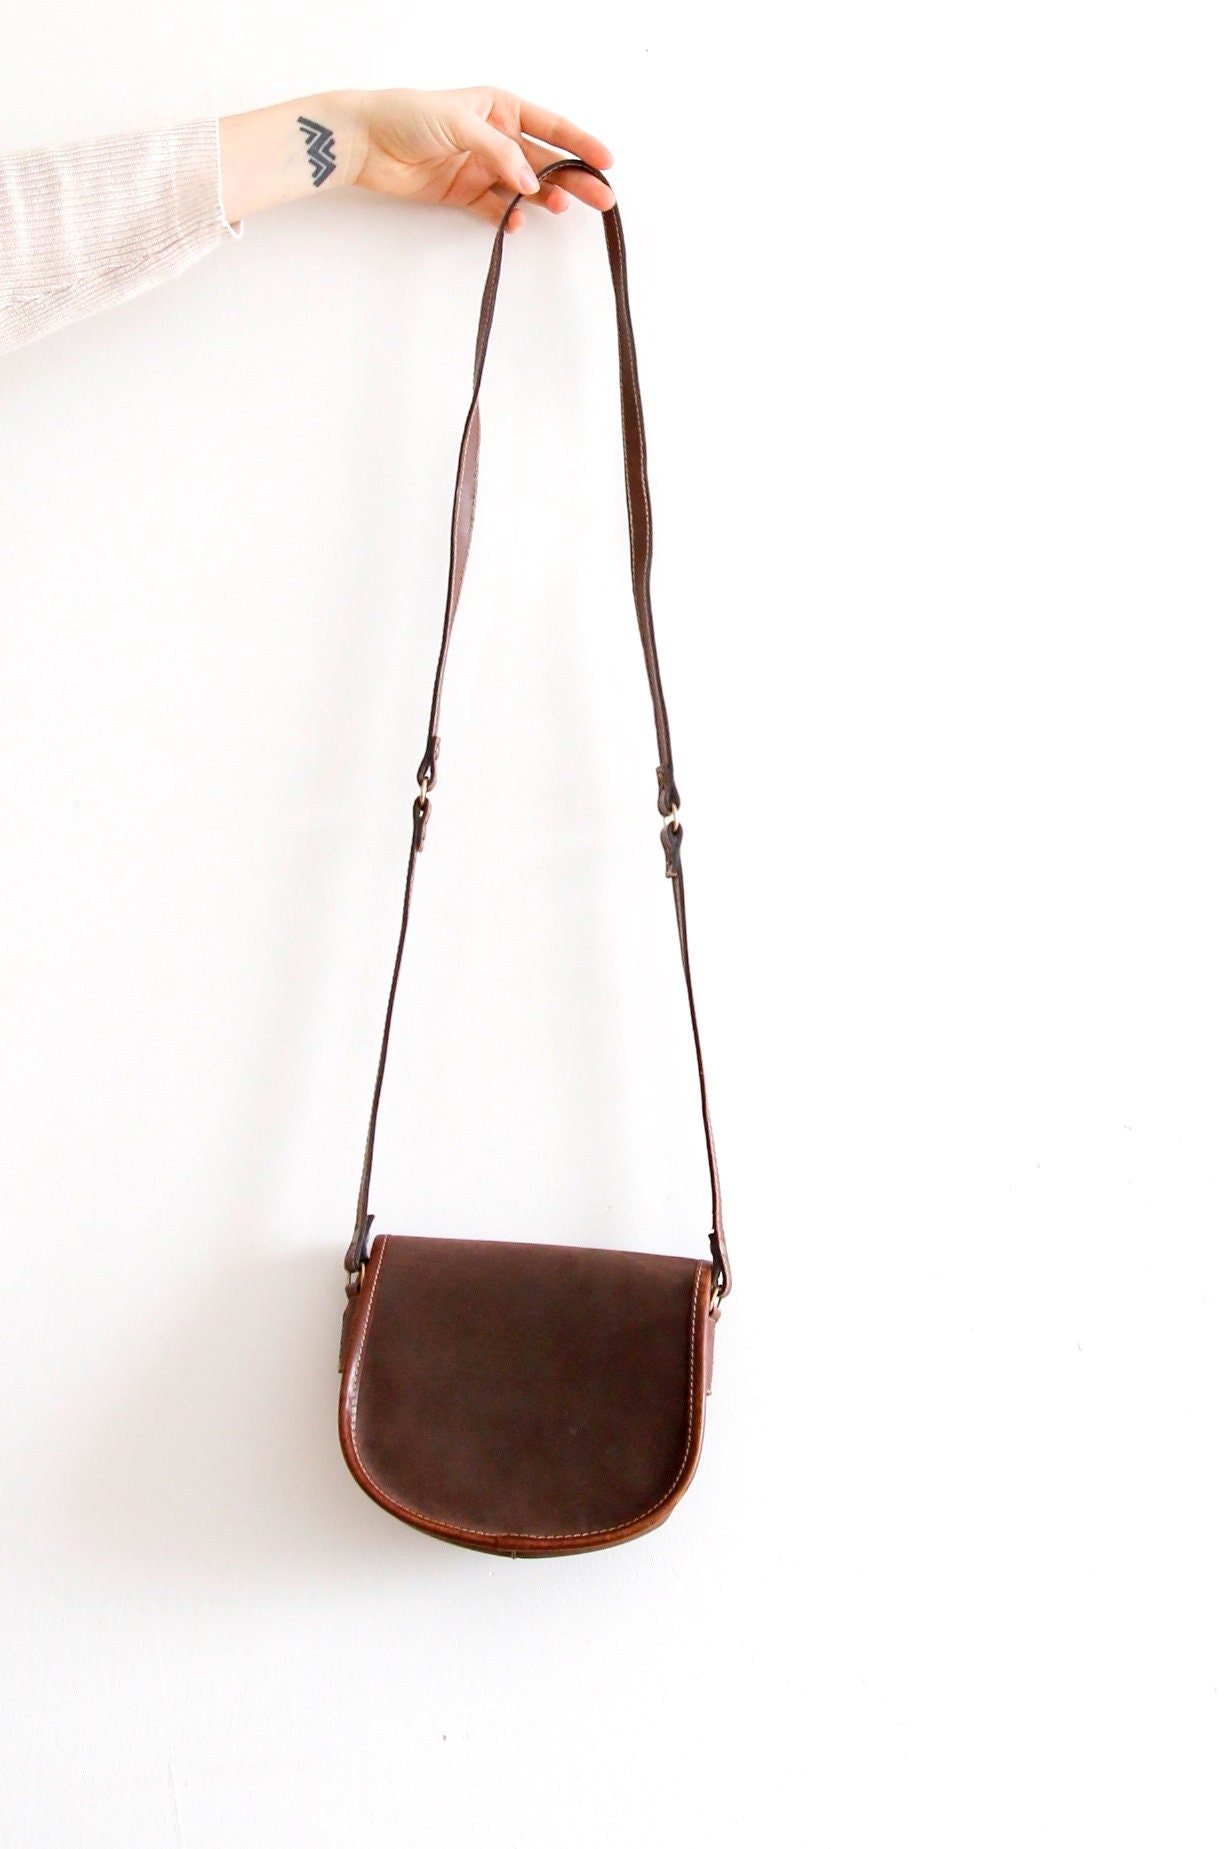 Vintage Suede Leather Bag Tooled Leather Bag Brown Leather Bag | Etsy